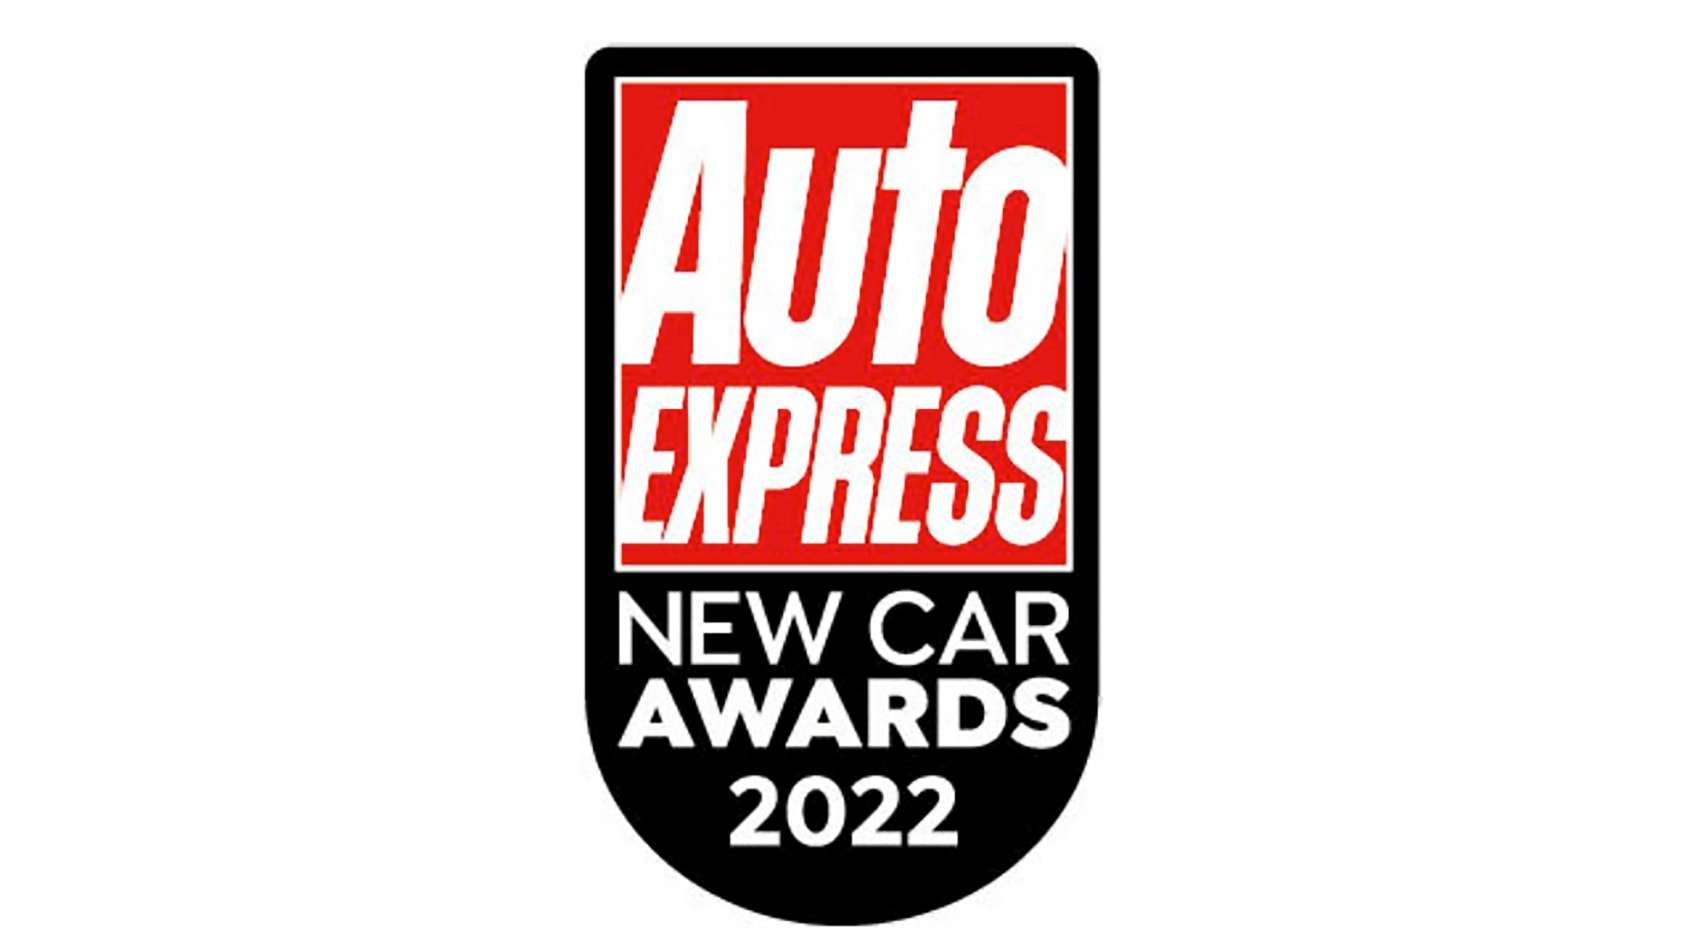 Auto Express New Car Awards 2022 logo